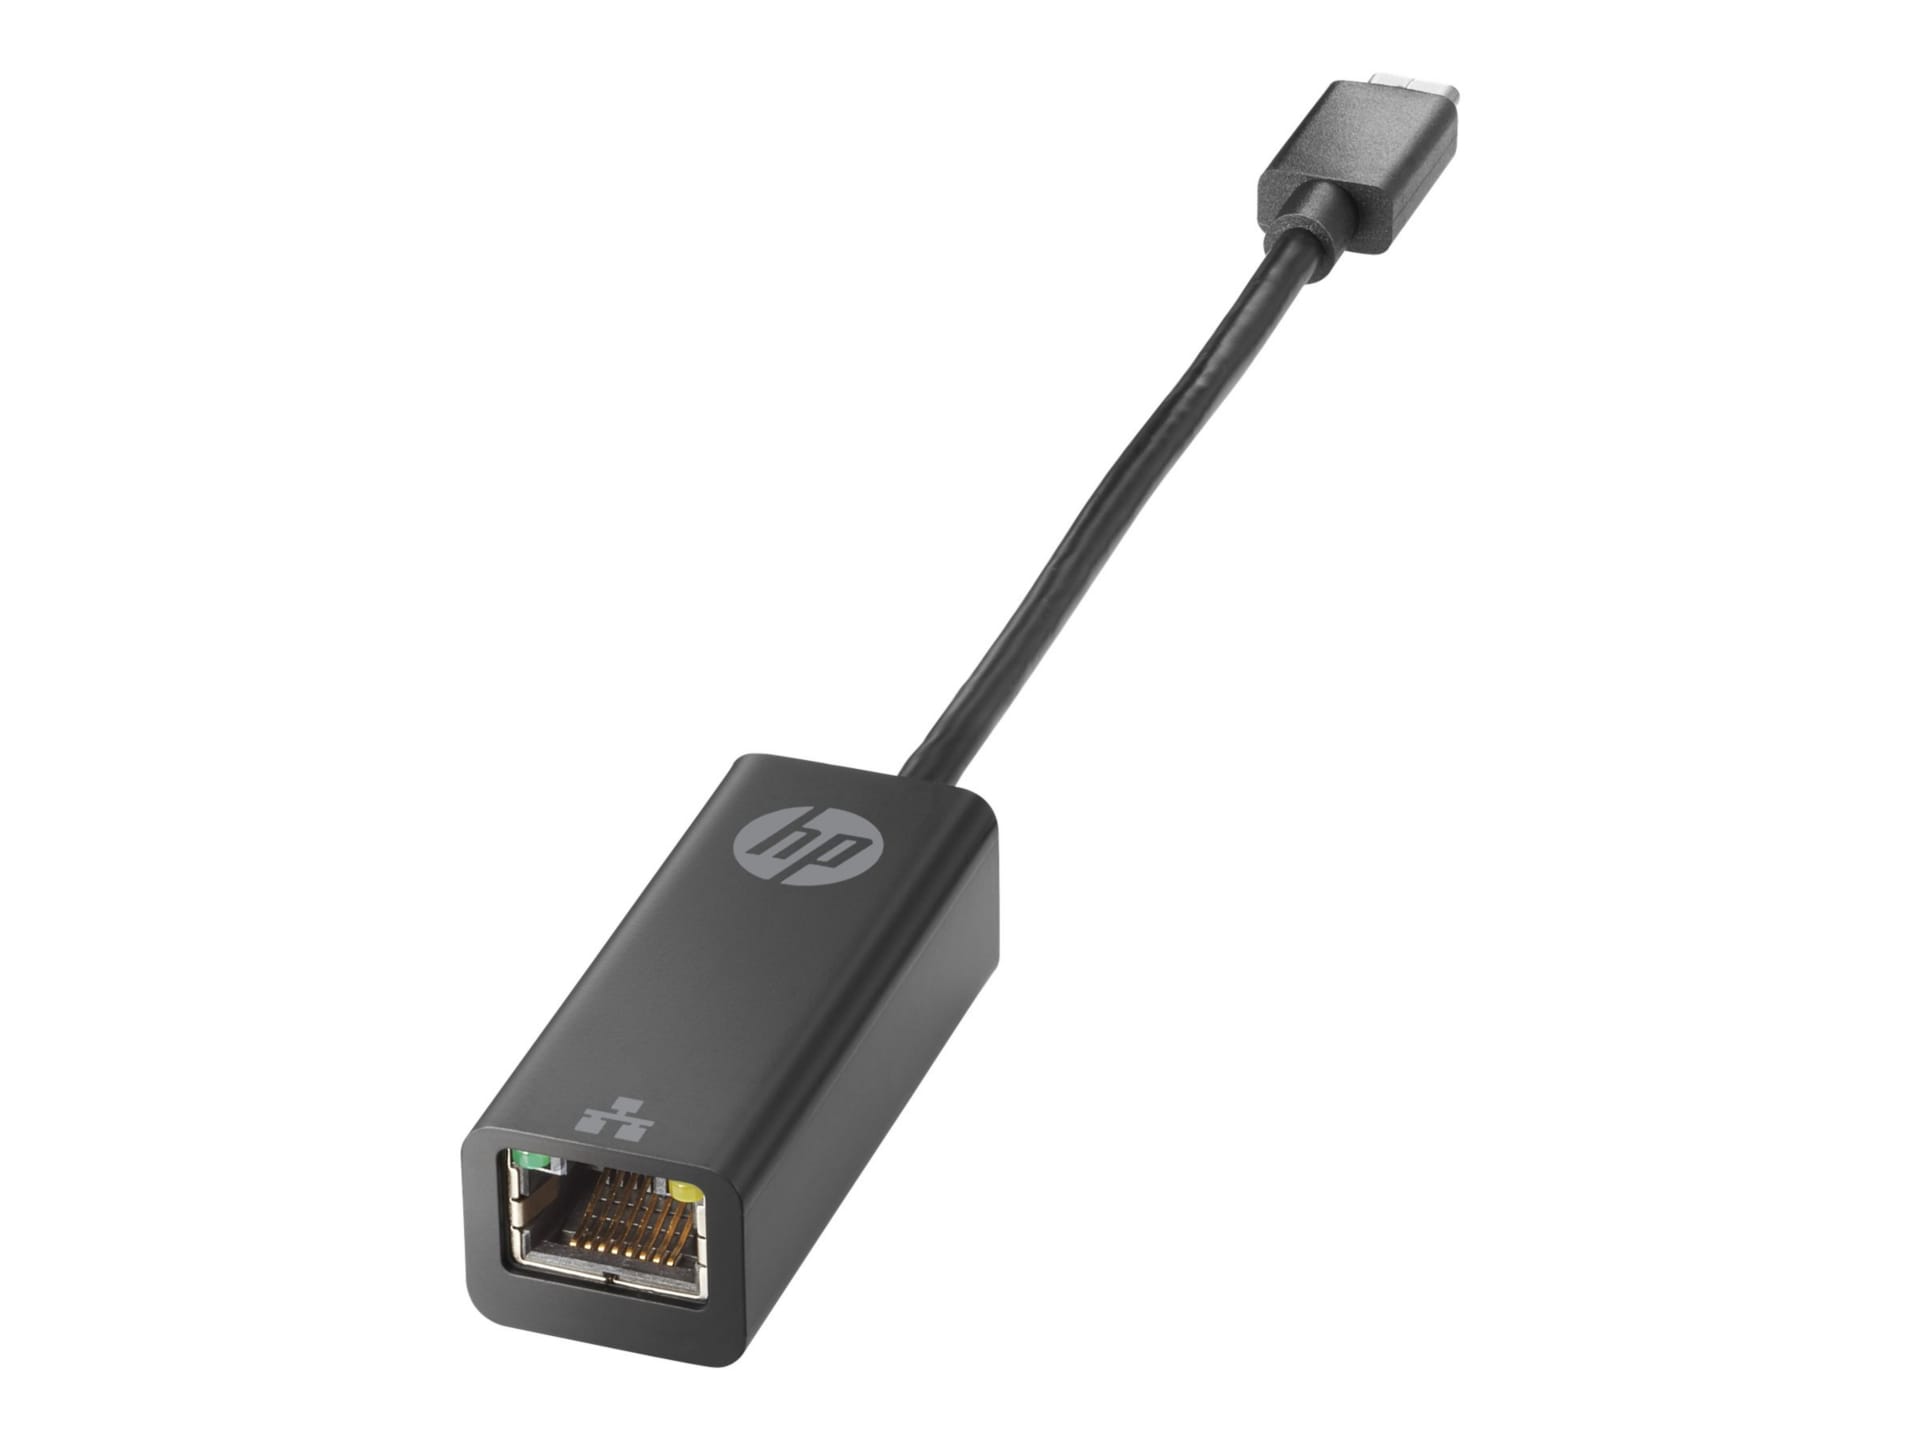 HP - network adapter - USB-C Gigabit Ethernet x 1 - Smart Buy - V7W66UT#ABA USB Adapters - CDW.com